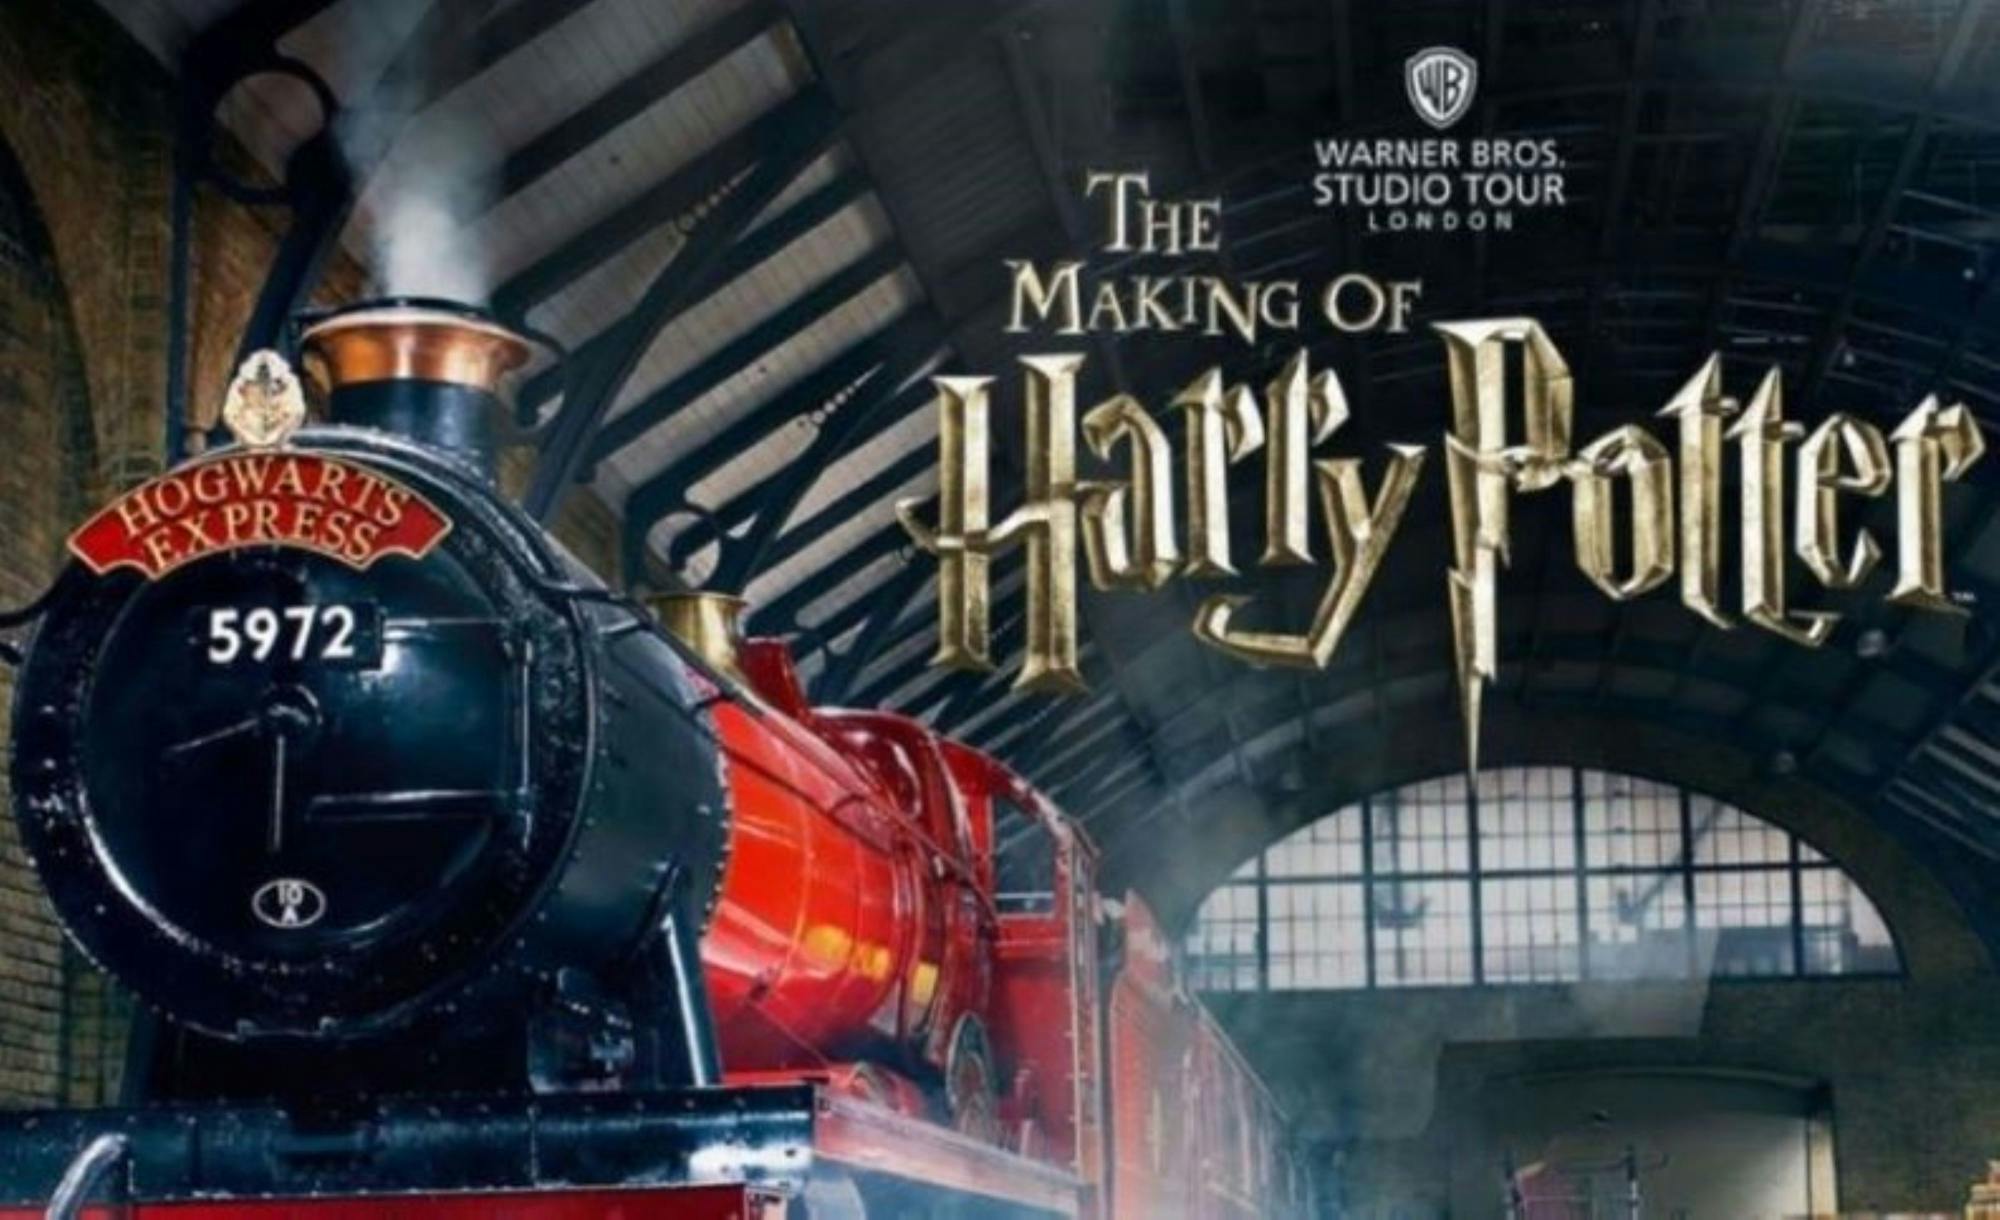 The Making of Harry Potter de Birmingham na classe Premium Standard